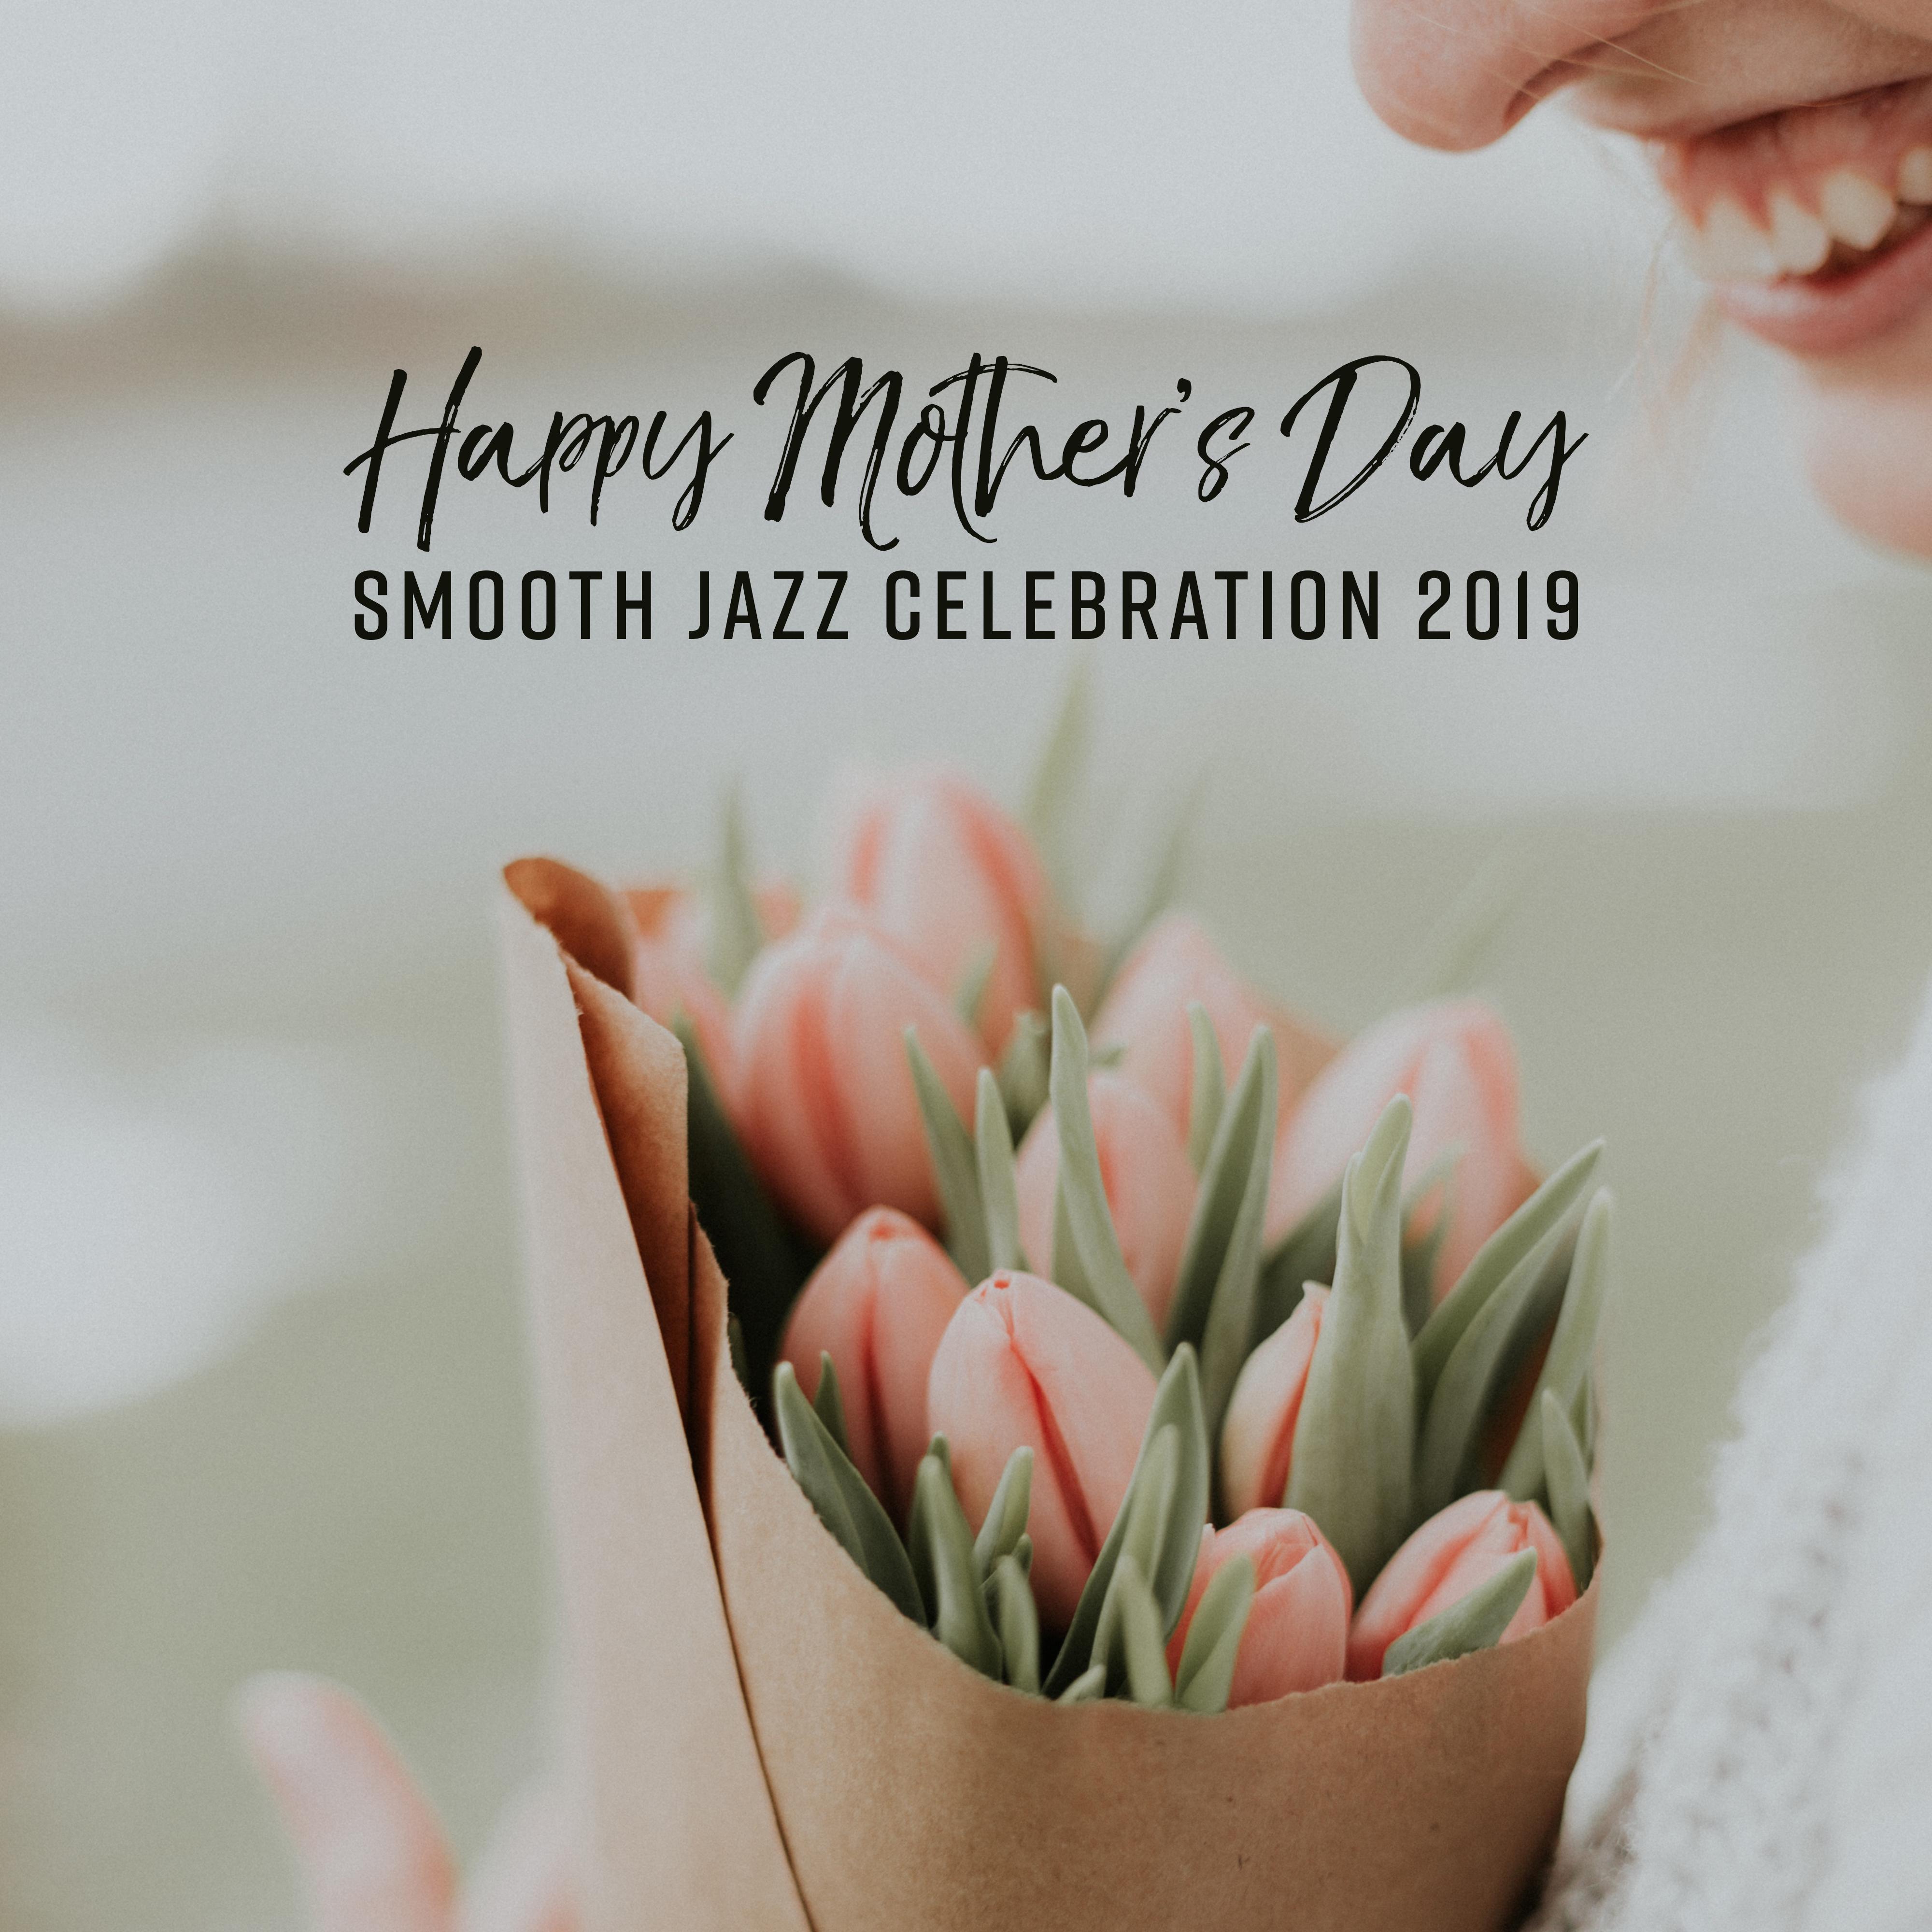 Happy Mother' s Day Smooth Jazz Celebration 2019